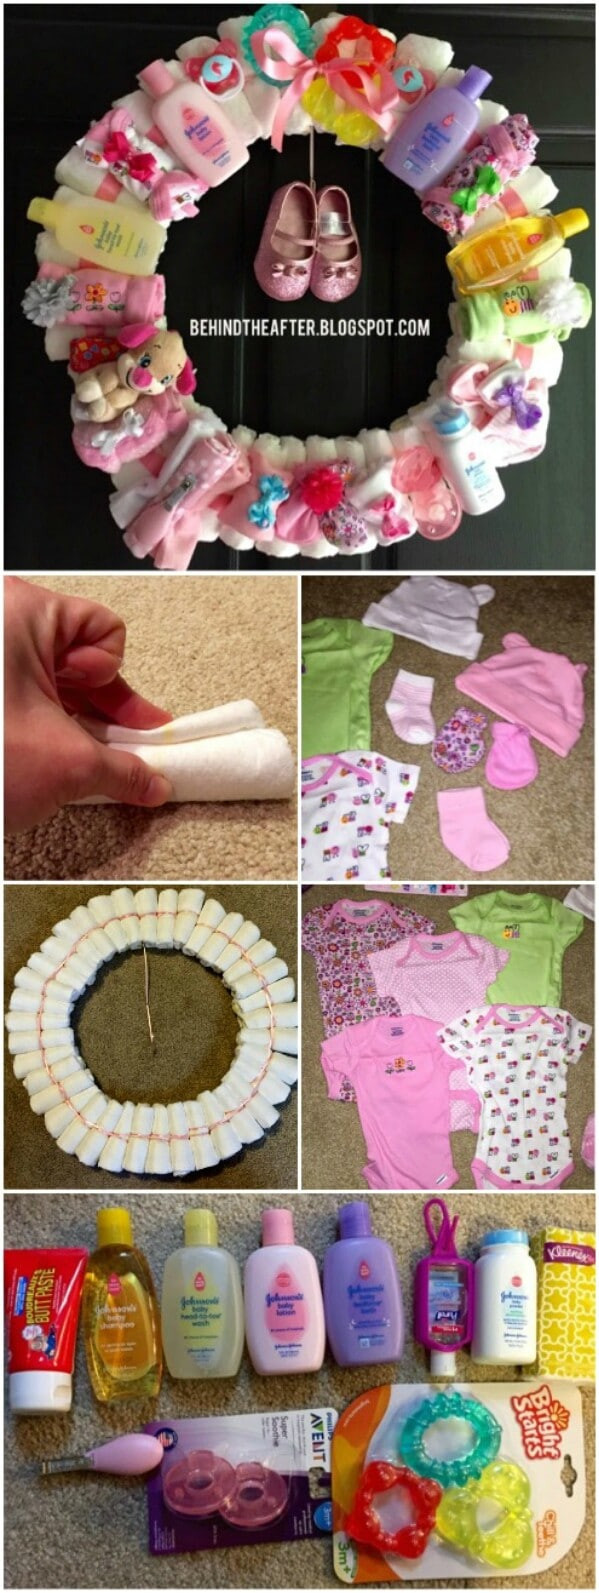 Homemade Baby Shower Gift Ideas
 25 Enchantingly Adorable Baby Shower Gift Ideas That Will